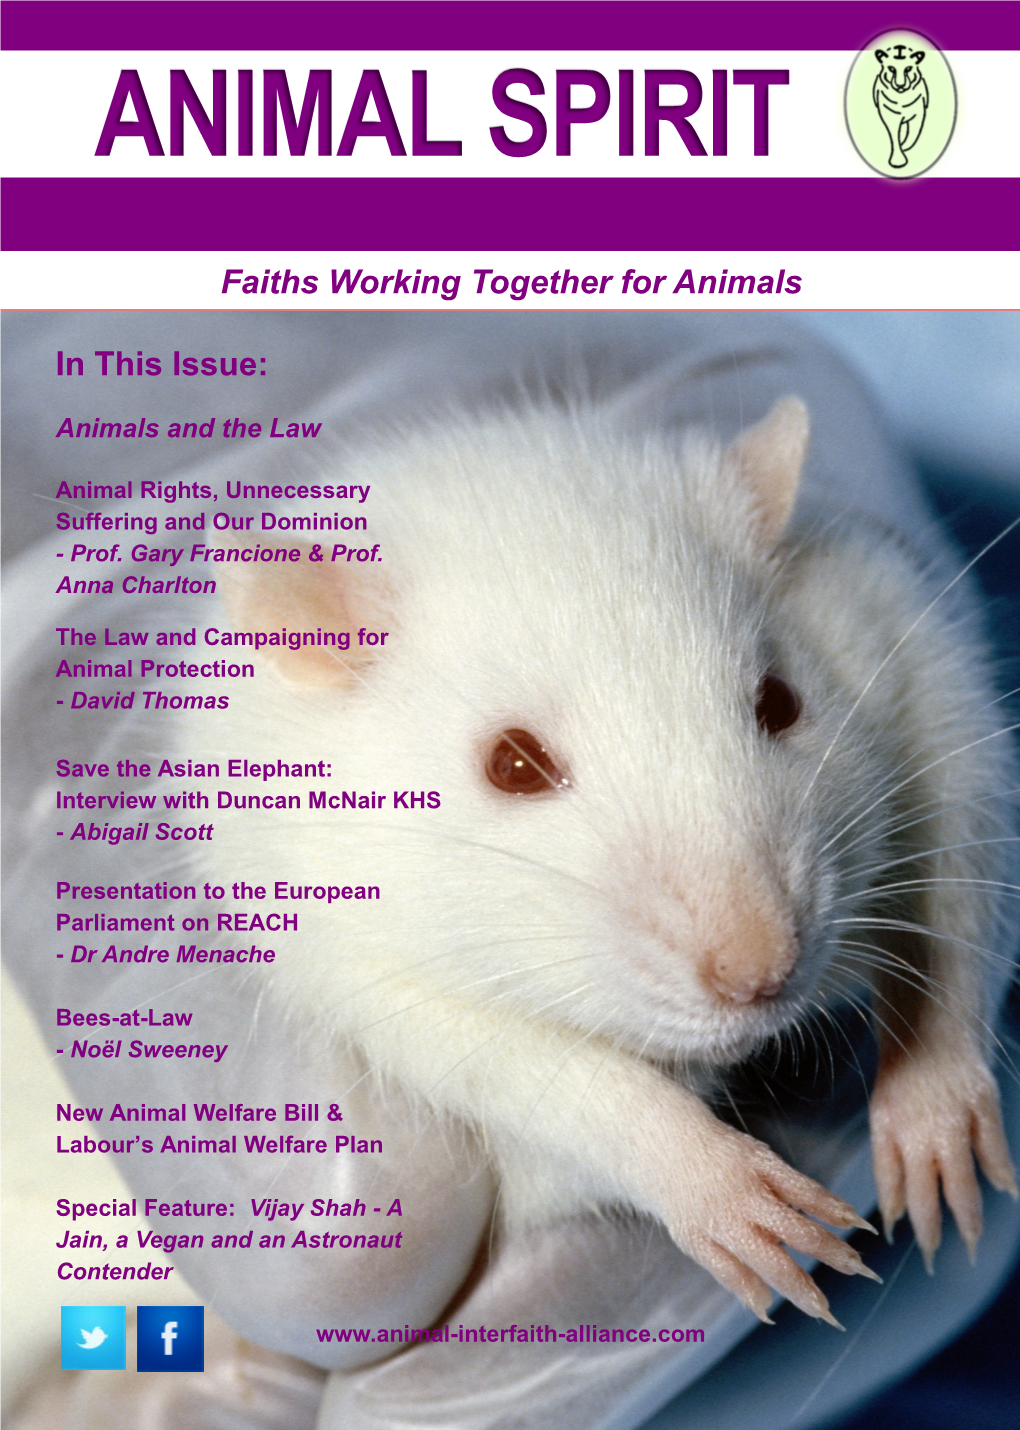 ANIMAL SPIRIT the Animal Interfaith Alliance Magazine Spring 2018 - Issue 8